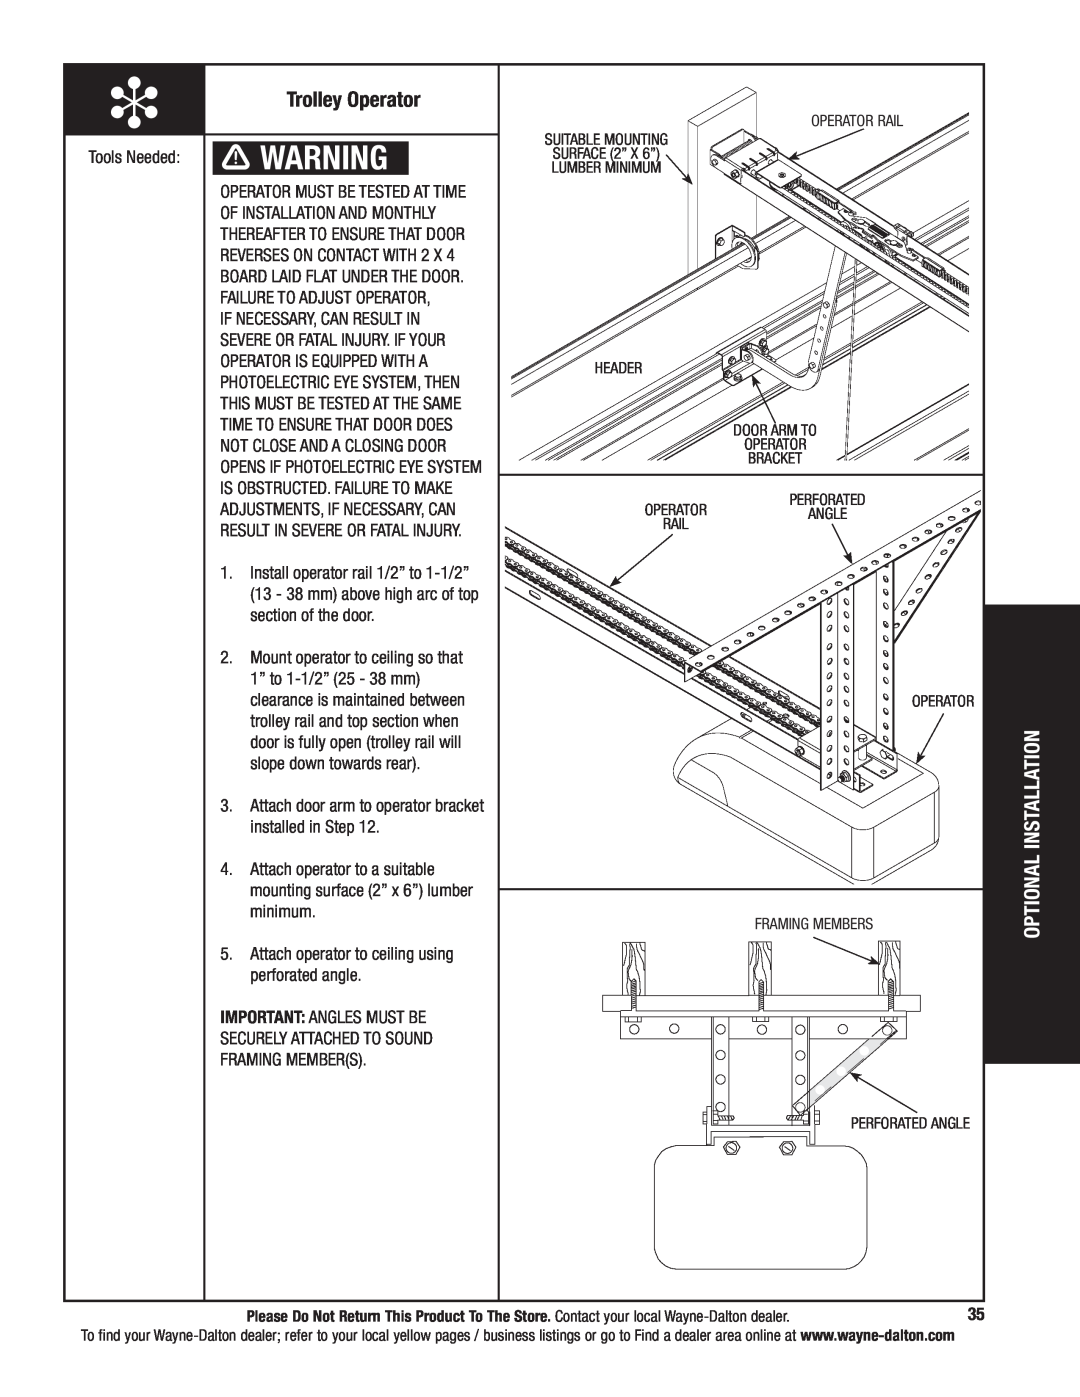 Wayne-Dalton 5120, 5140 installation instructions Trolley Operator, Optional Installation 